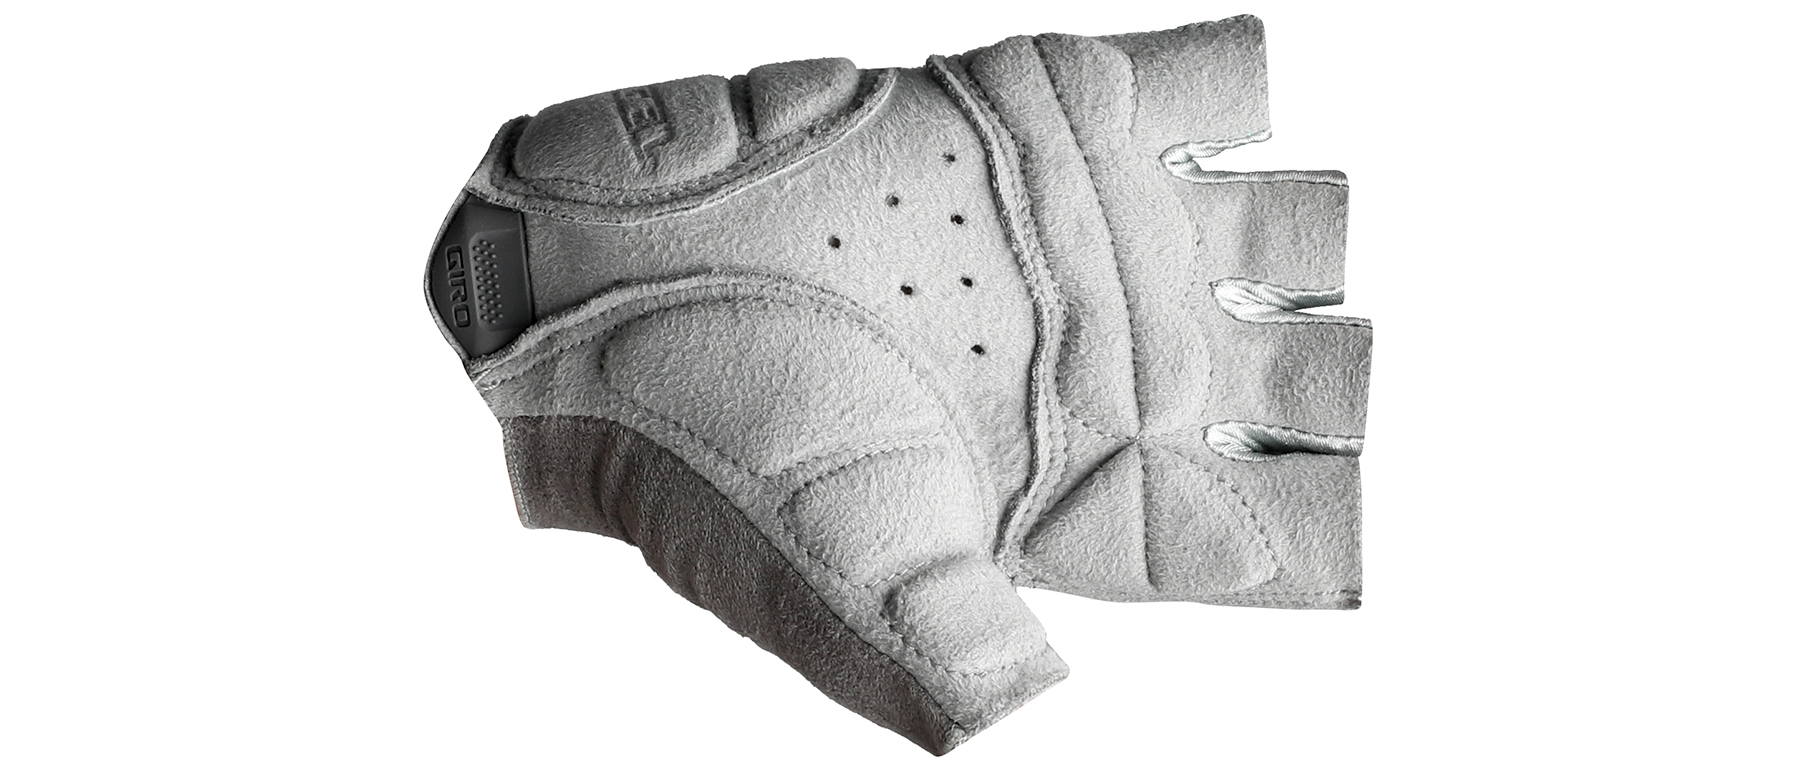 Giro Tessa Gel Glove